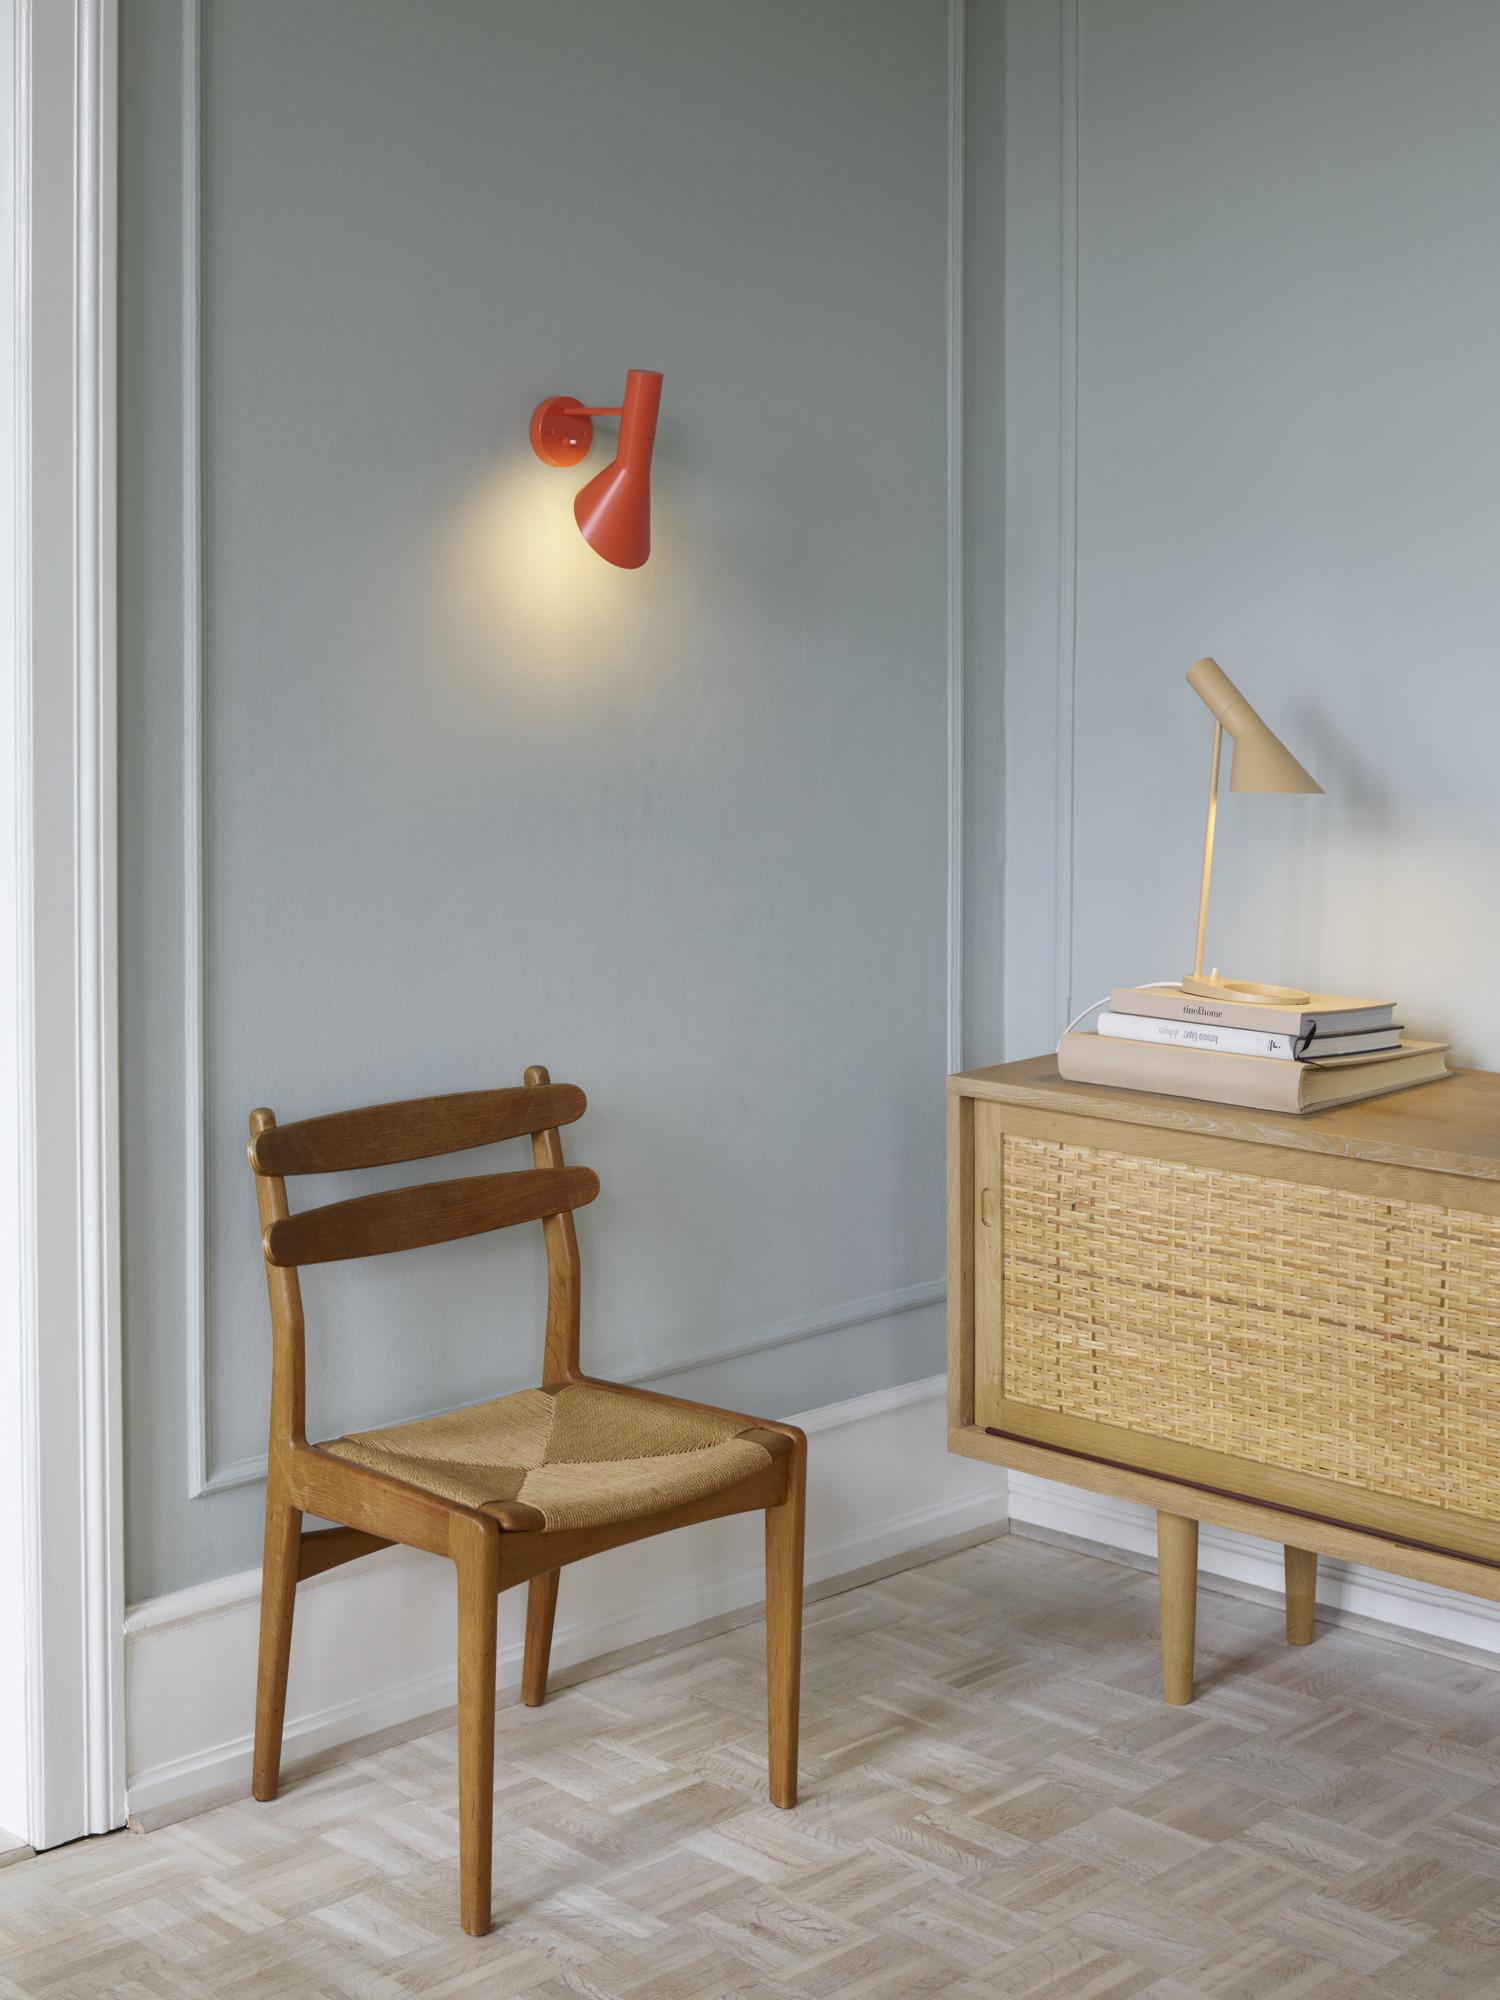 Arne Jacobsen AJ Wall Light for Louis Poulsen in Stainless Steel For Sale 2